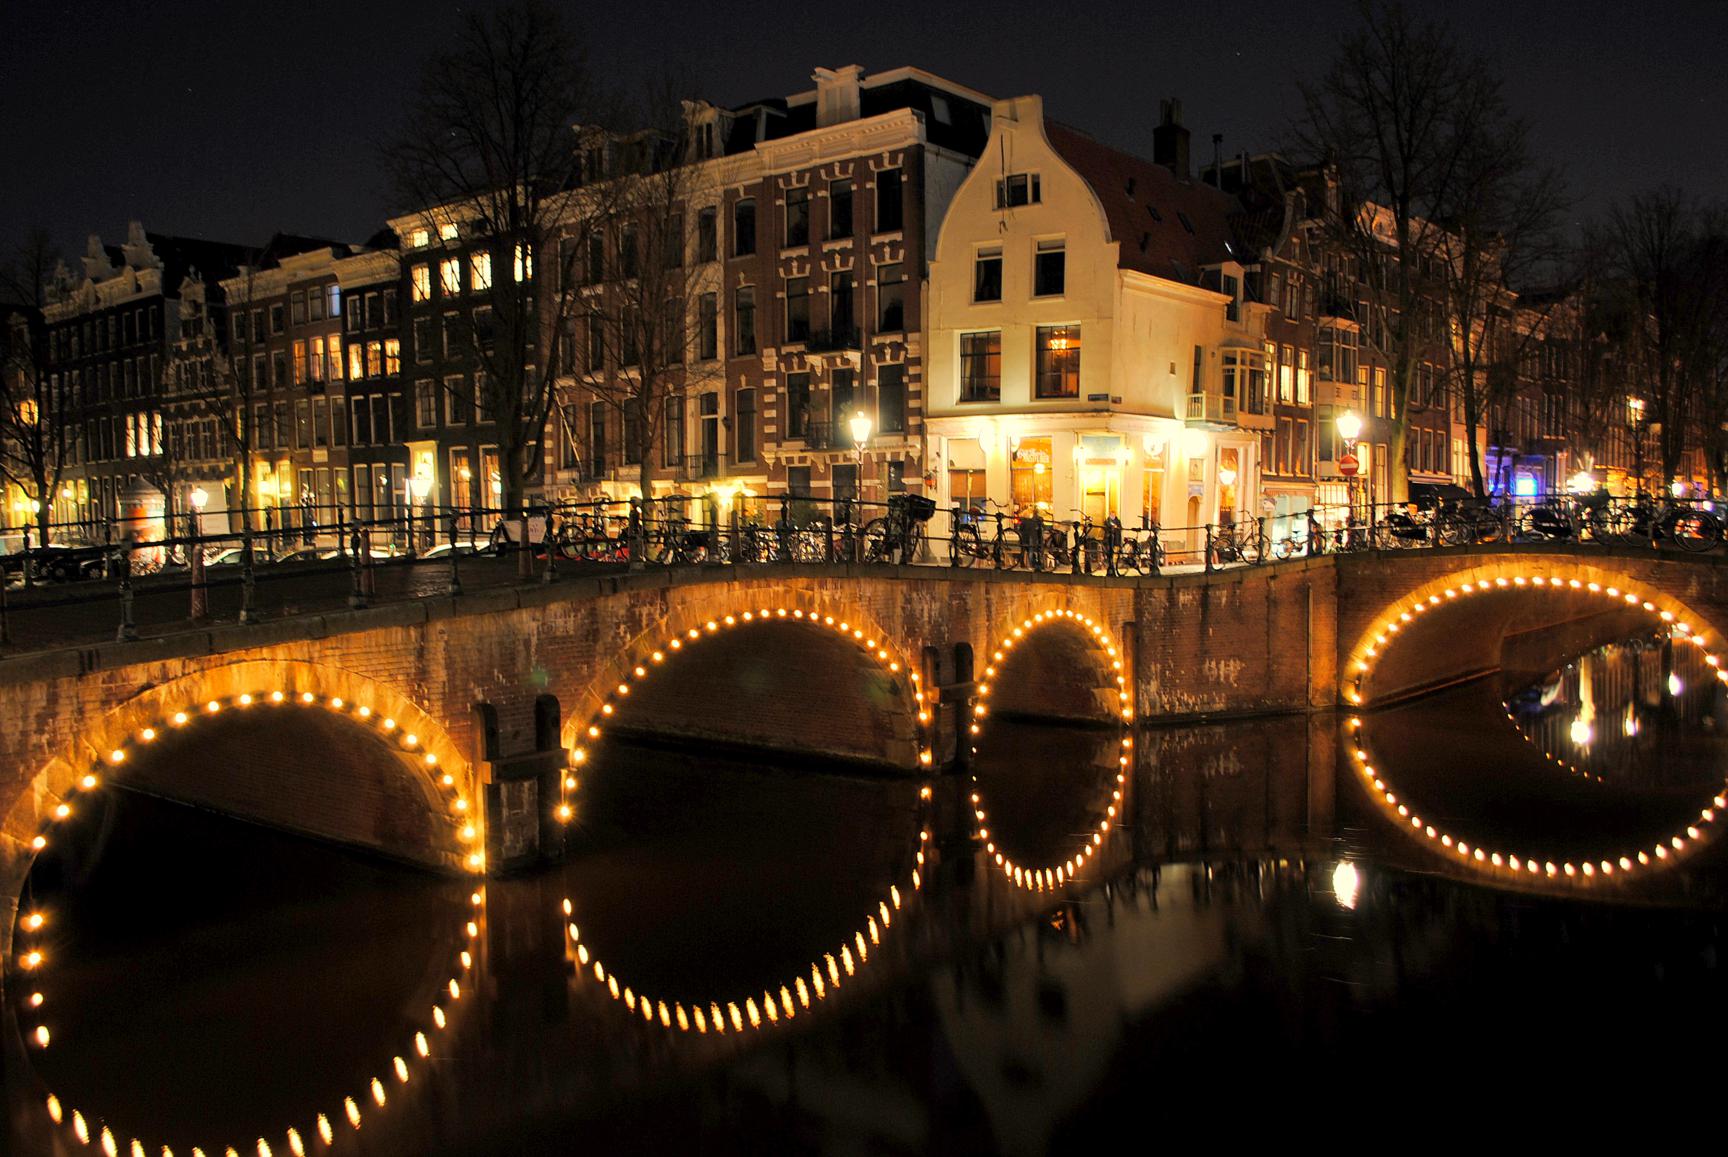 Canal Herengracht